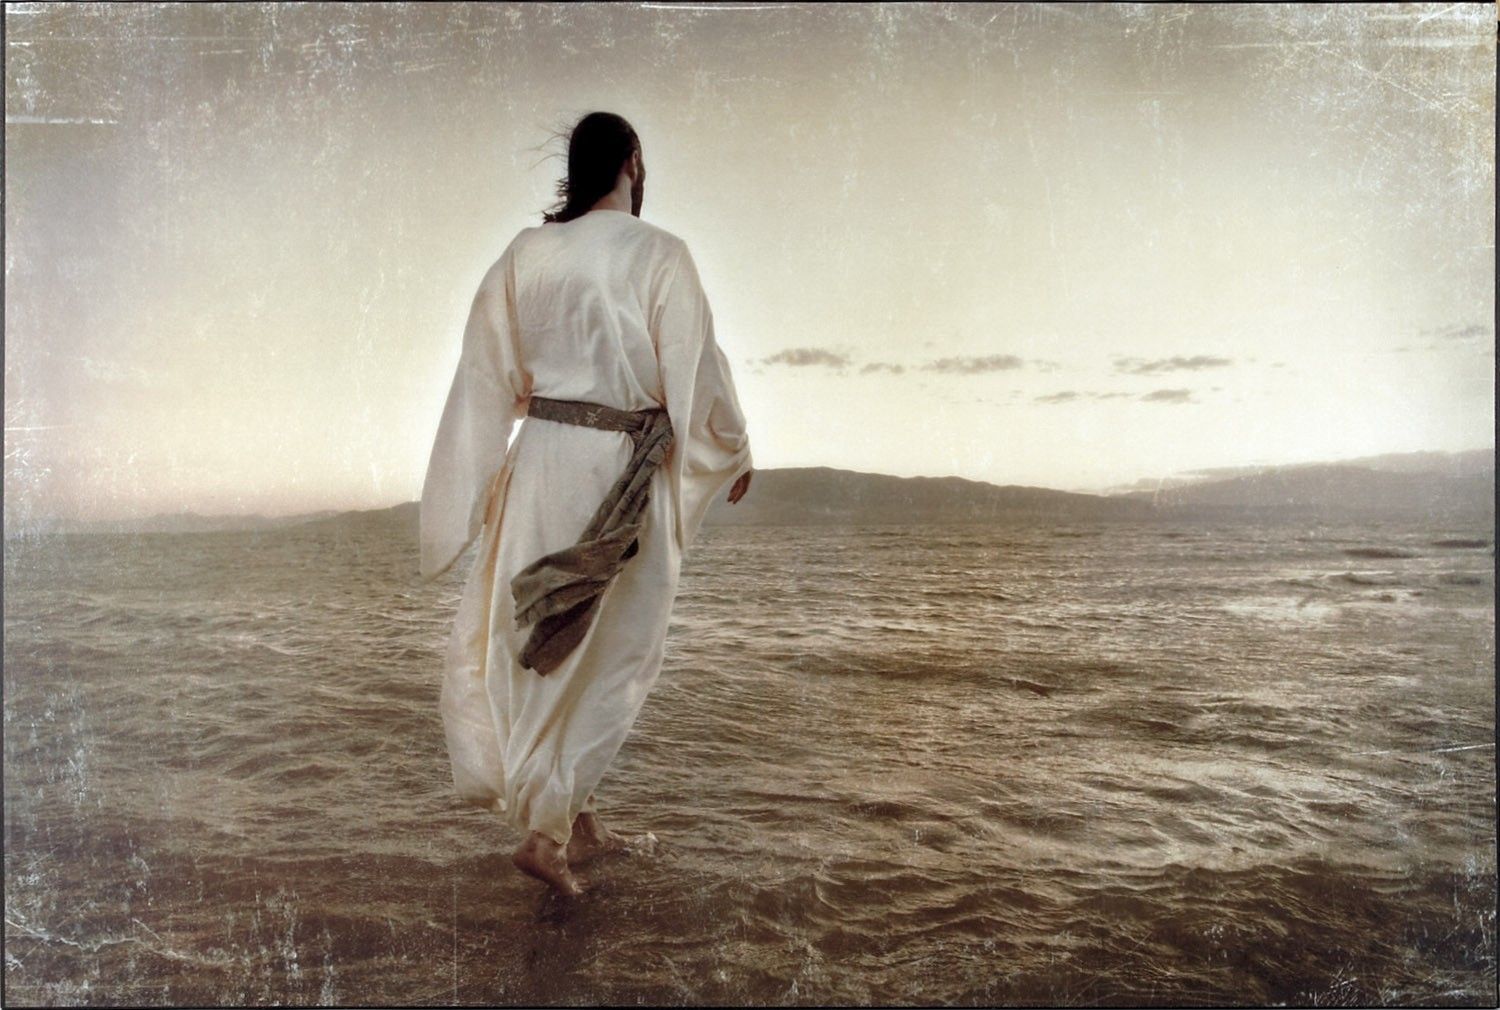 camminare dietro a Gesù